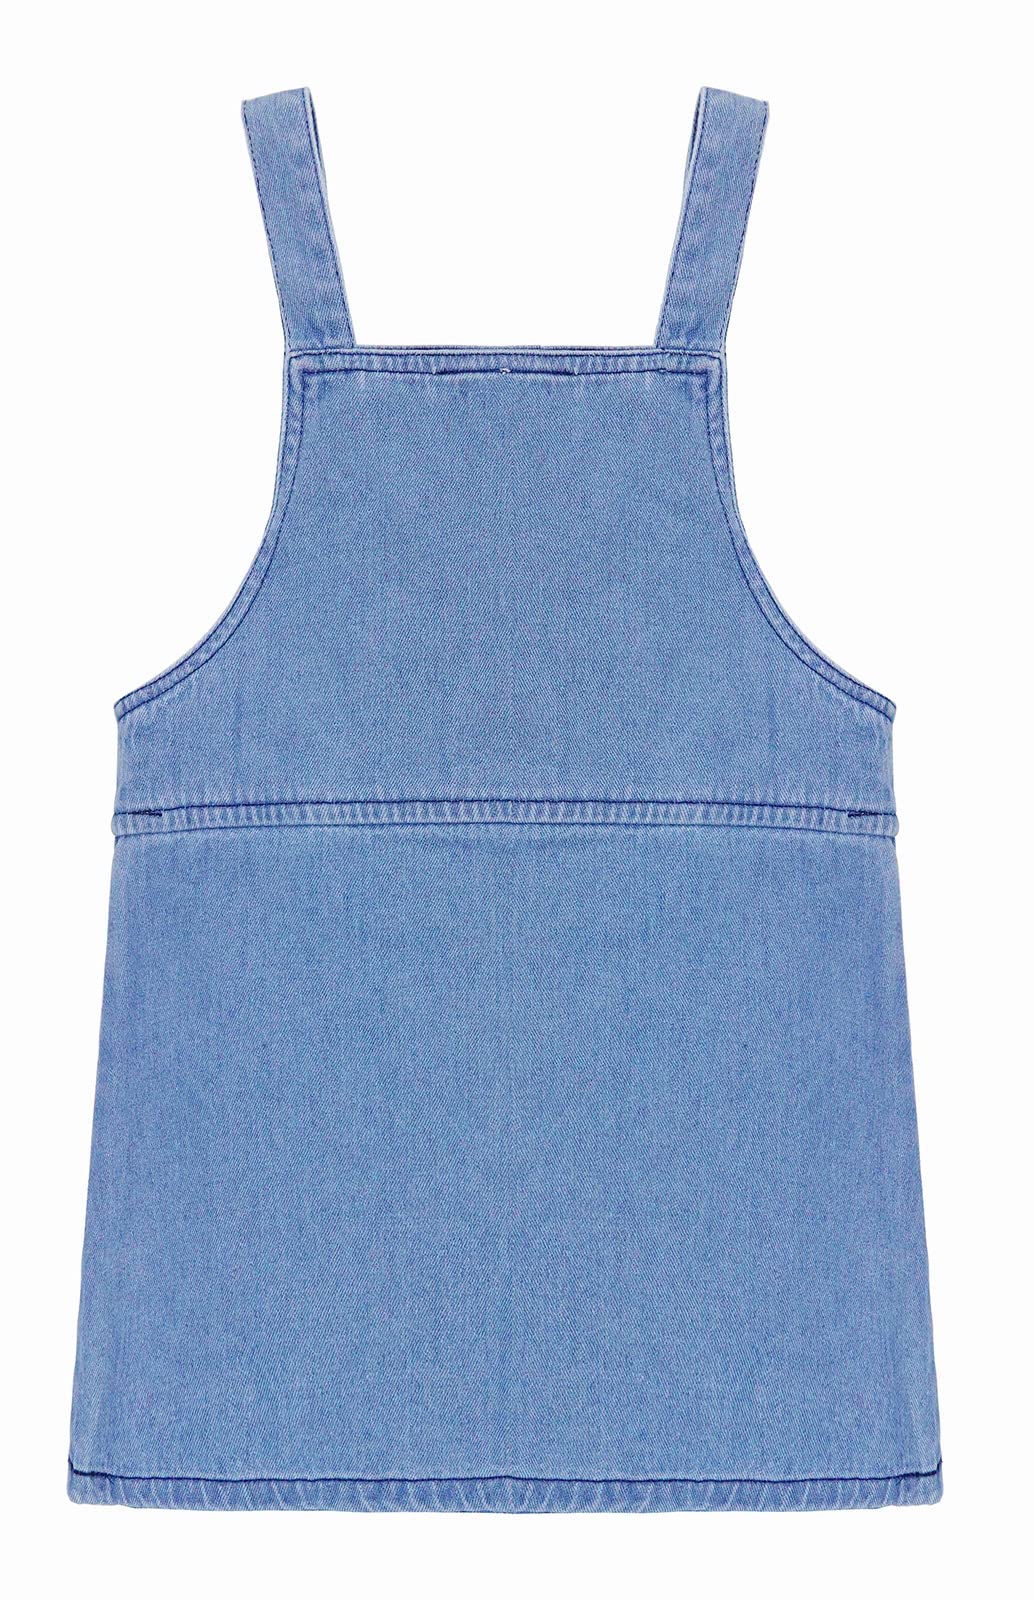 KIDSCOOL SPACE Baby Little Girl Denim Overalls,Simple Design Summer Jumpsuit Dress